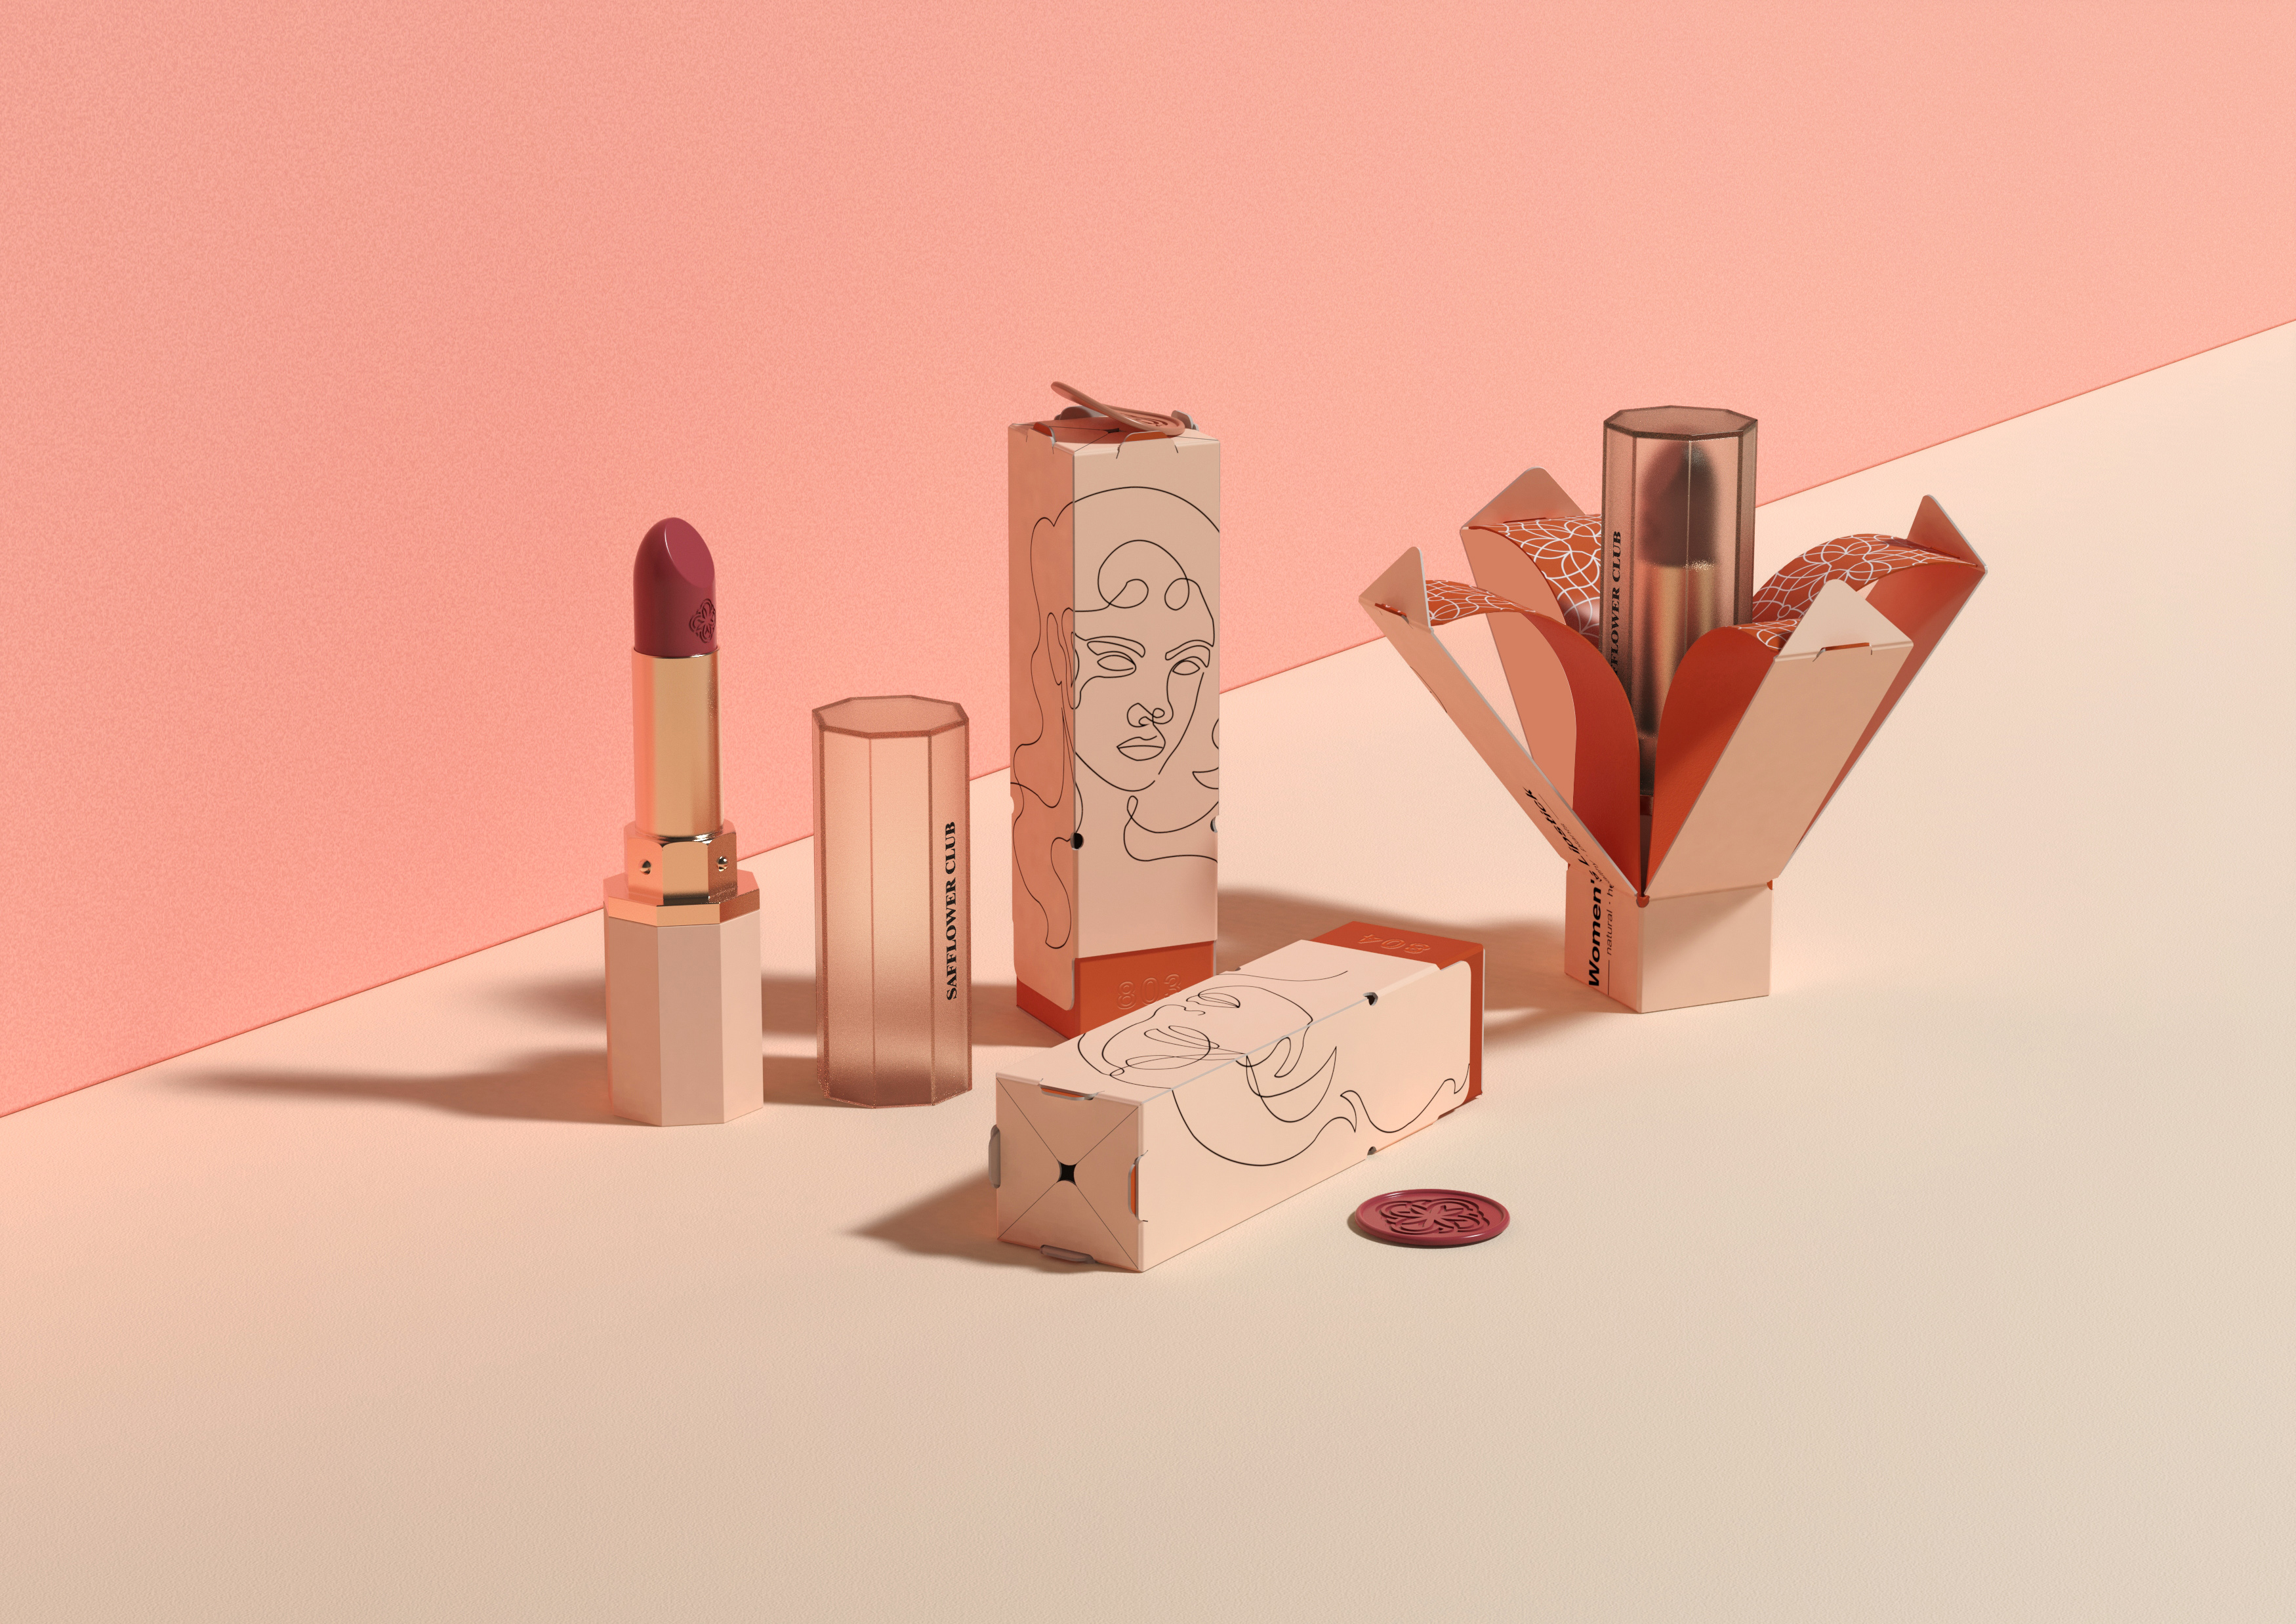 SAFELOWER CLUB Lipsticks Packaging